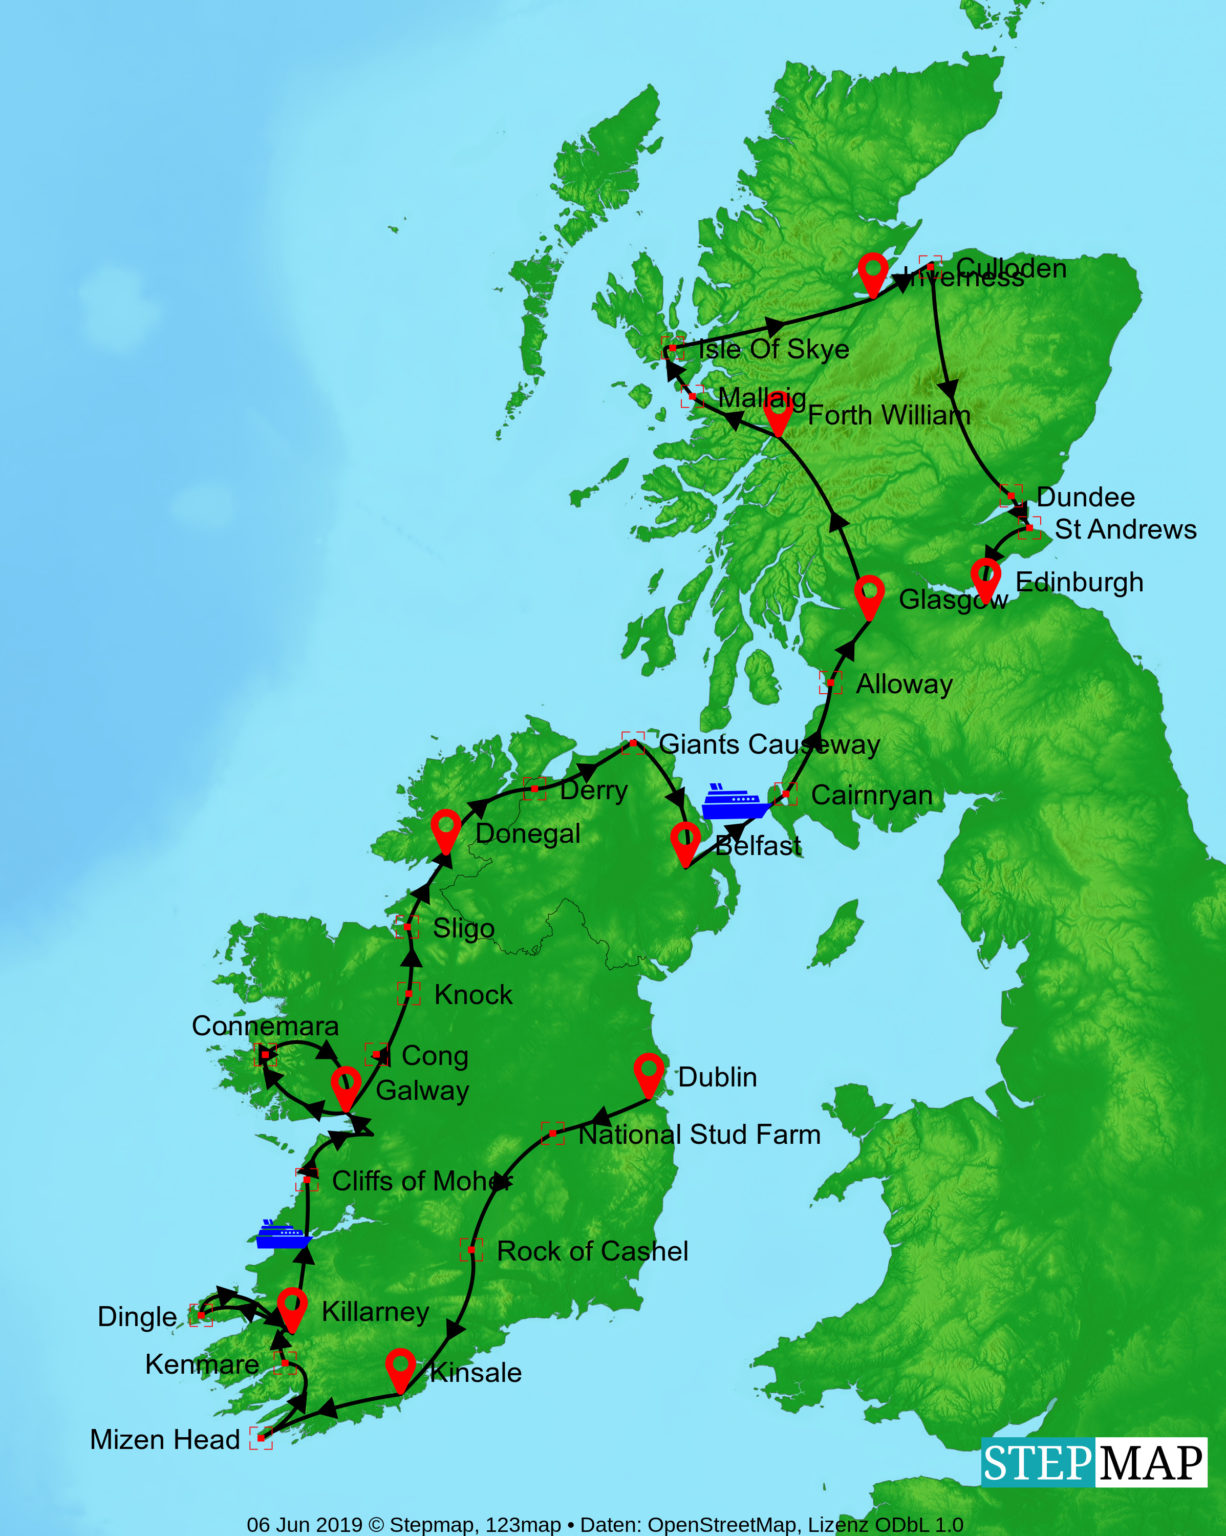 group tours to ireland and scotland